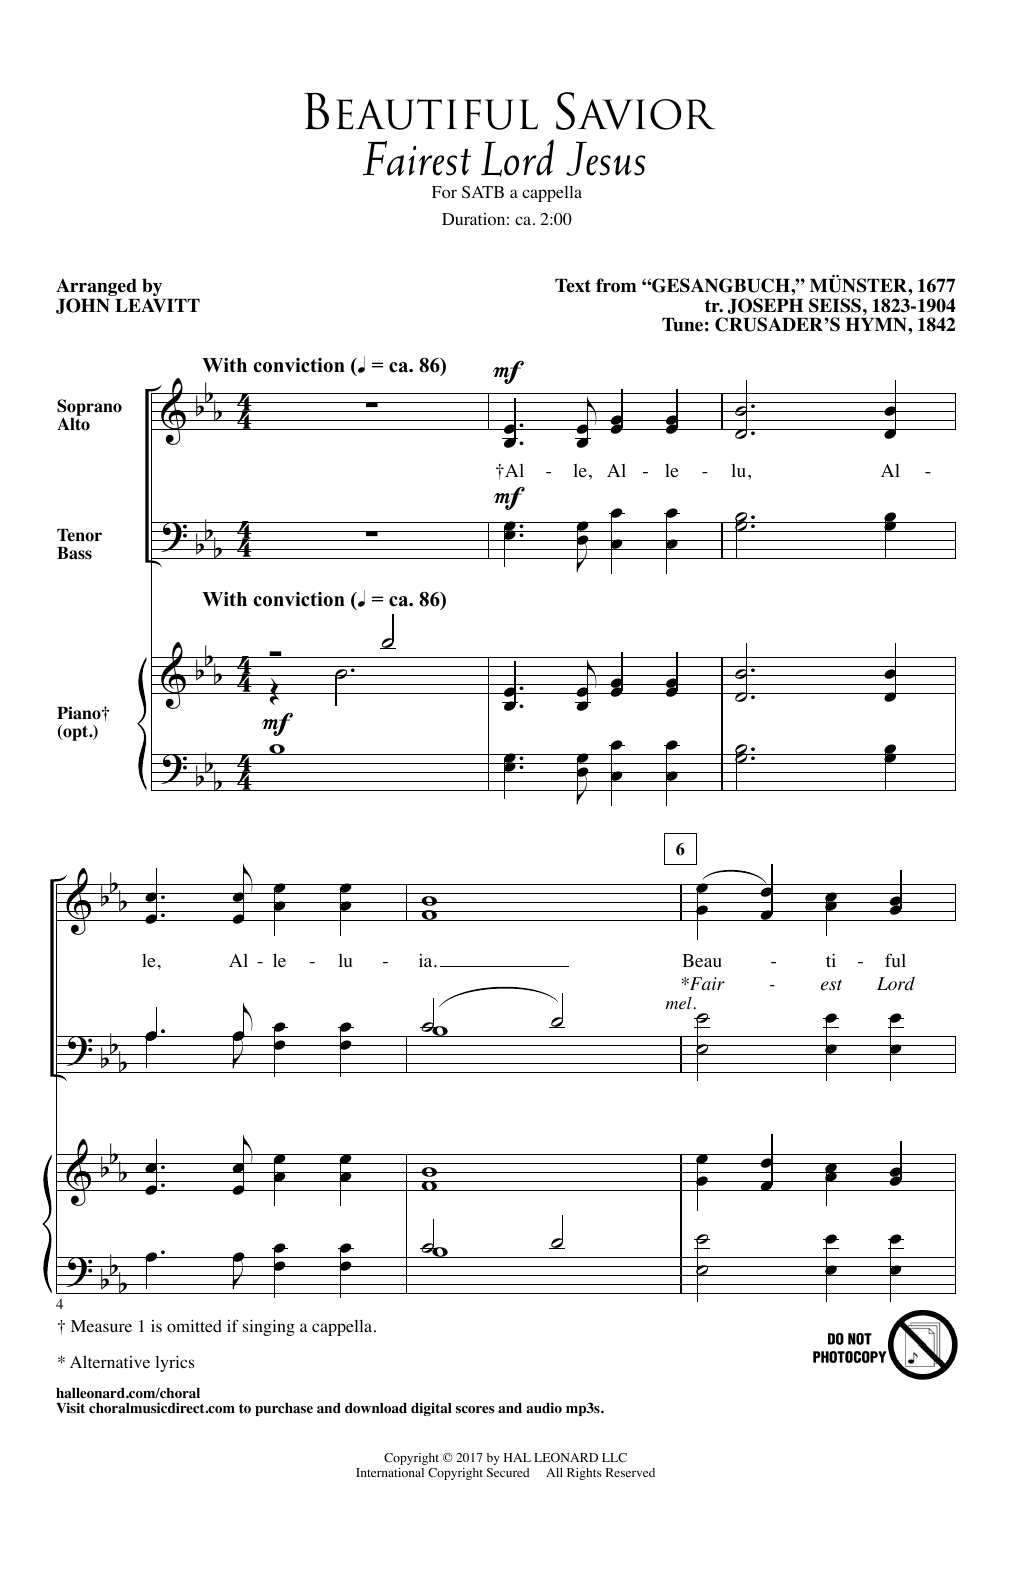 Download John Leavitt Beautiful Savior Sheet Music and learn how to play SATB PDF digital score in minutes